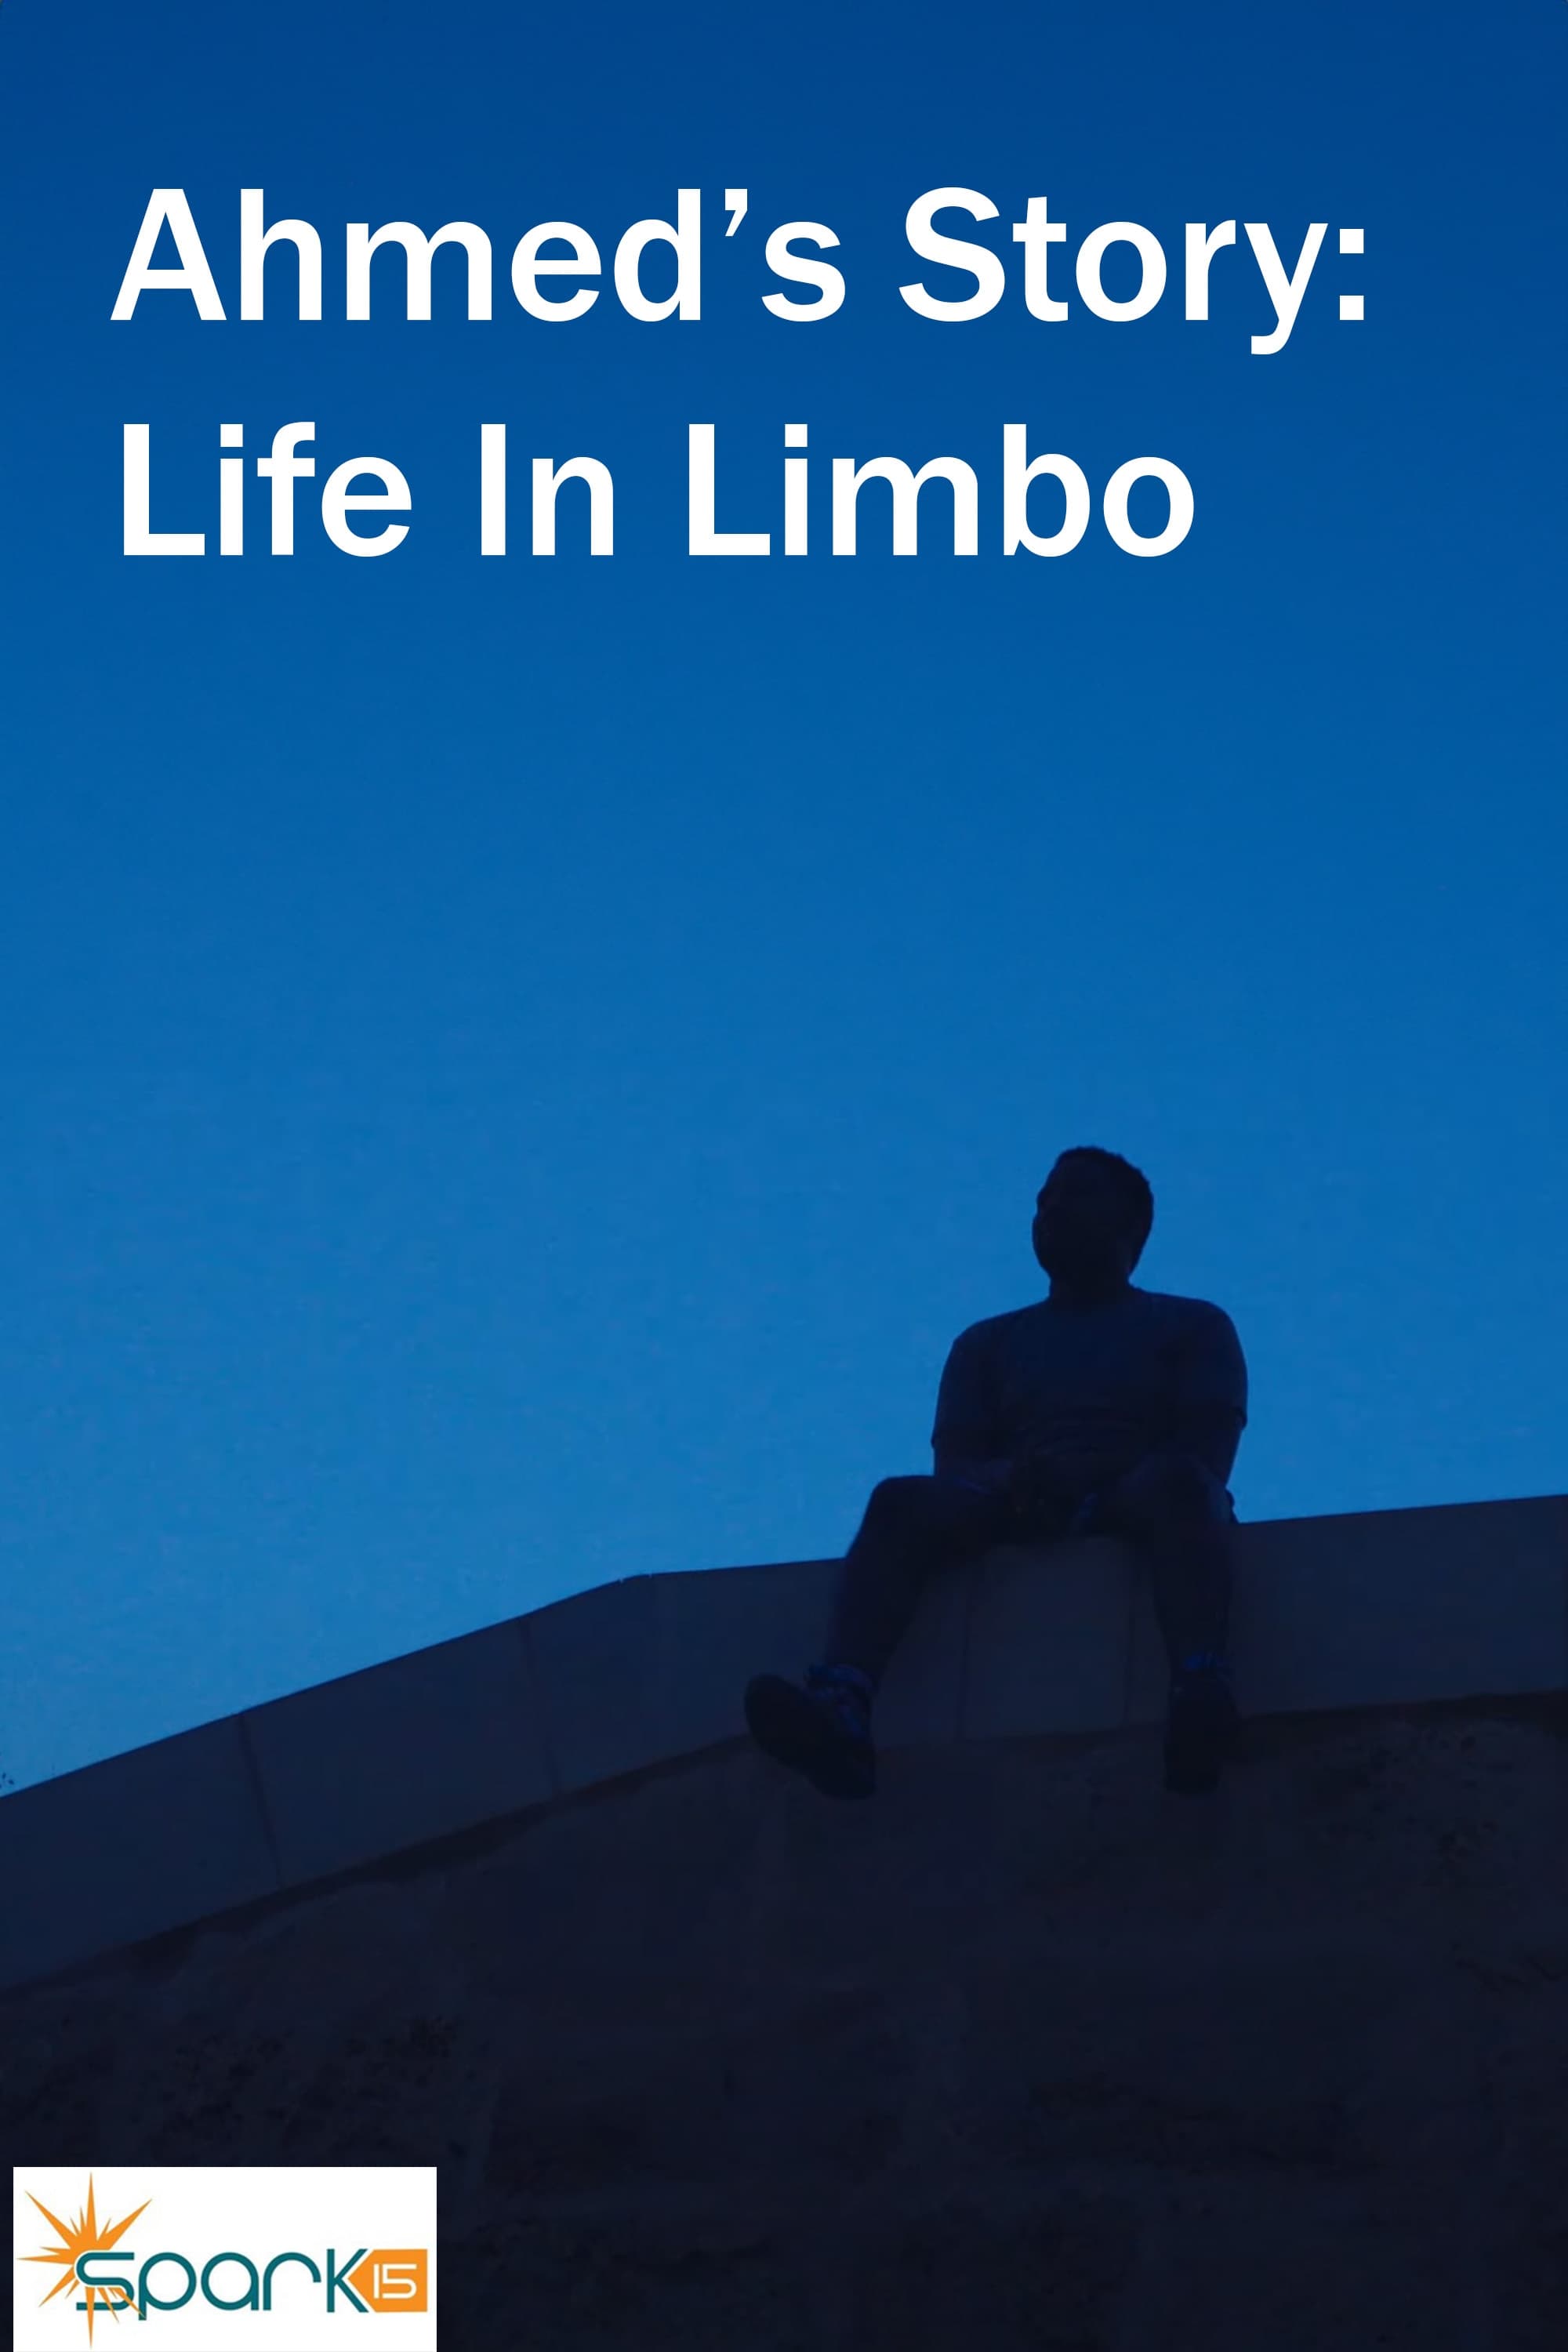 Ahmed's Story: Life in Limbo